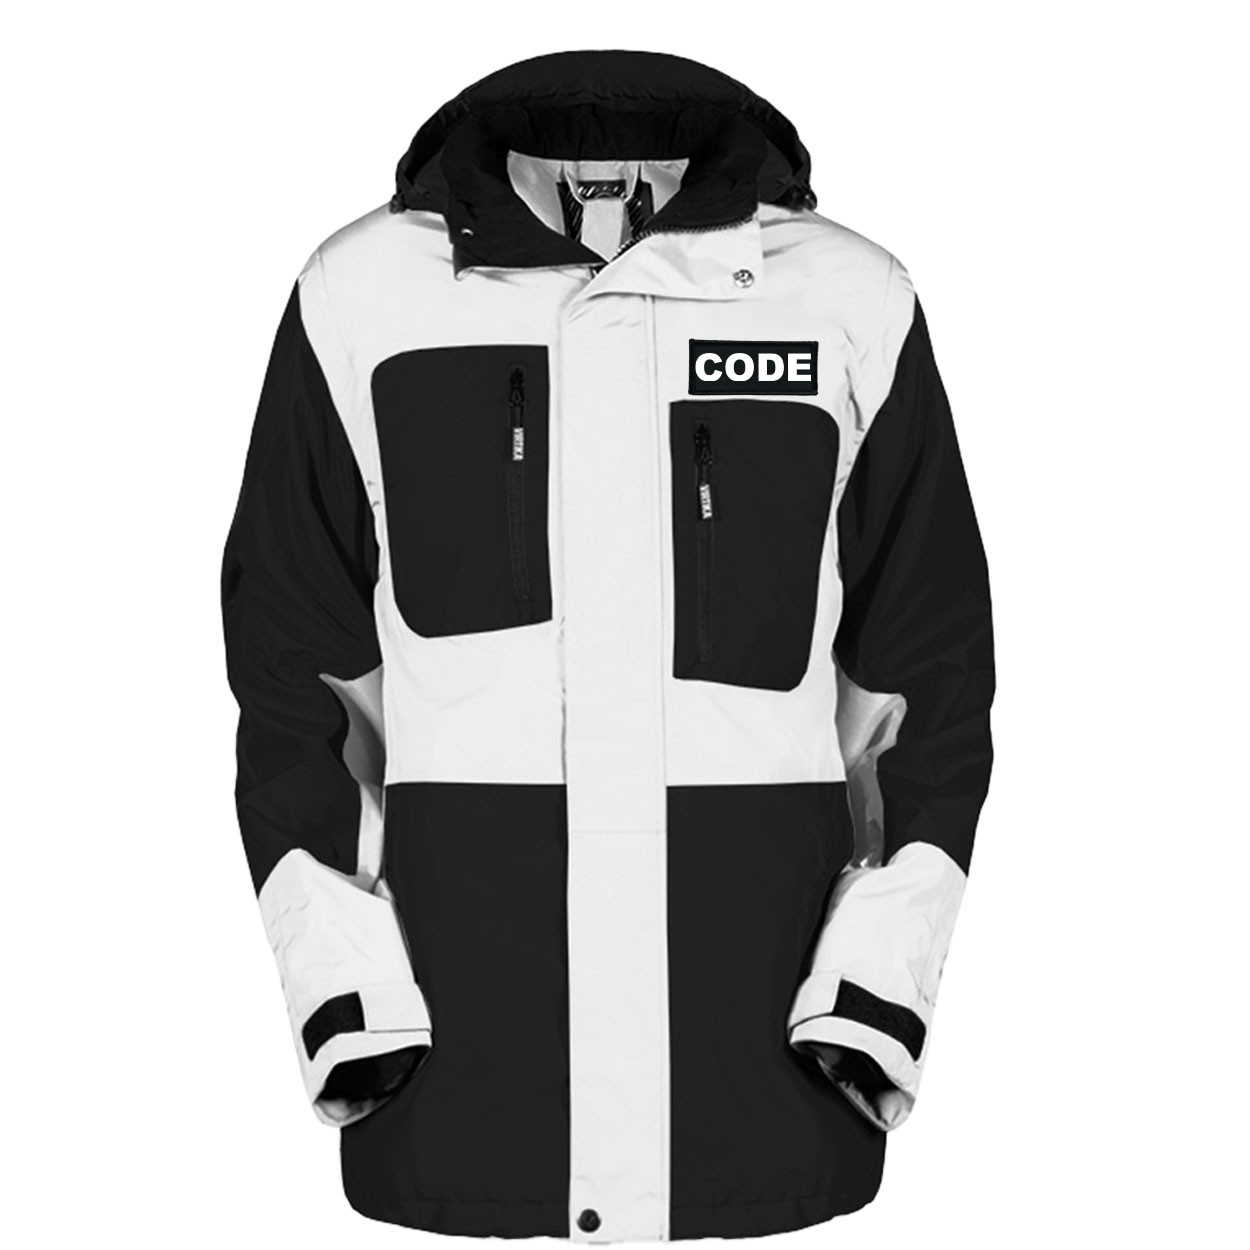 Code Brand Logo Pro Waterproof Breathable Winter Virtika Jacket Black/White (White Logo)